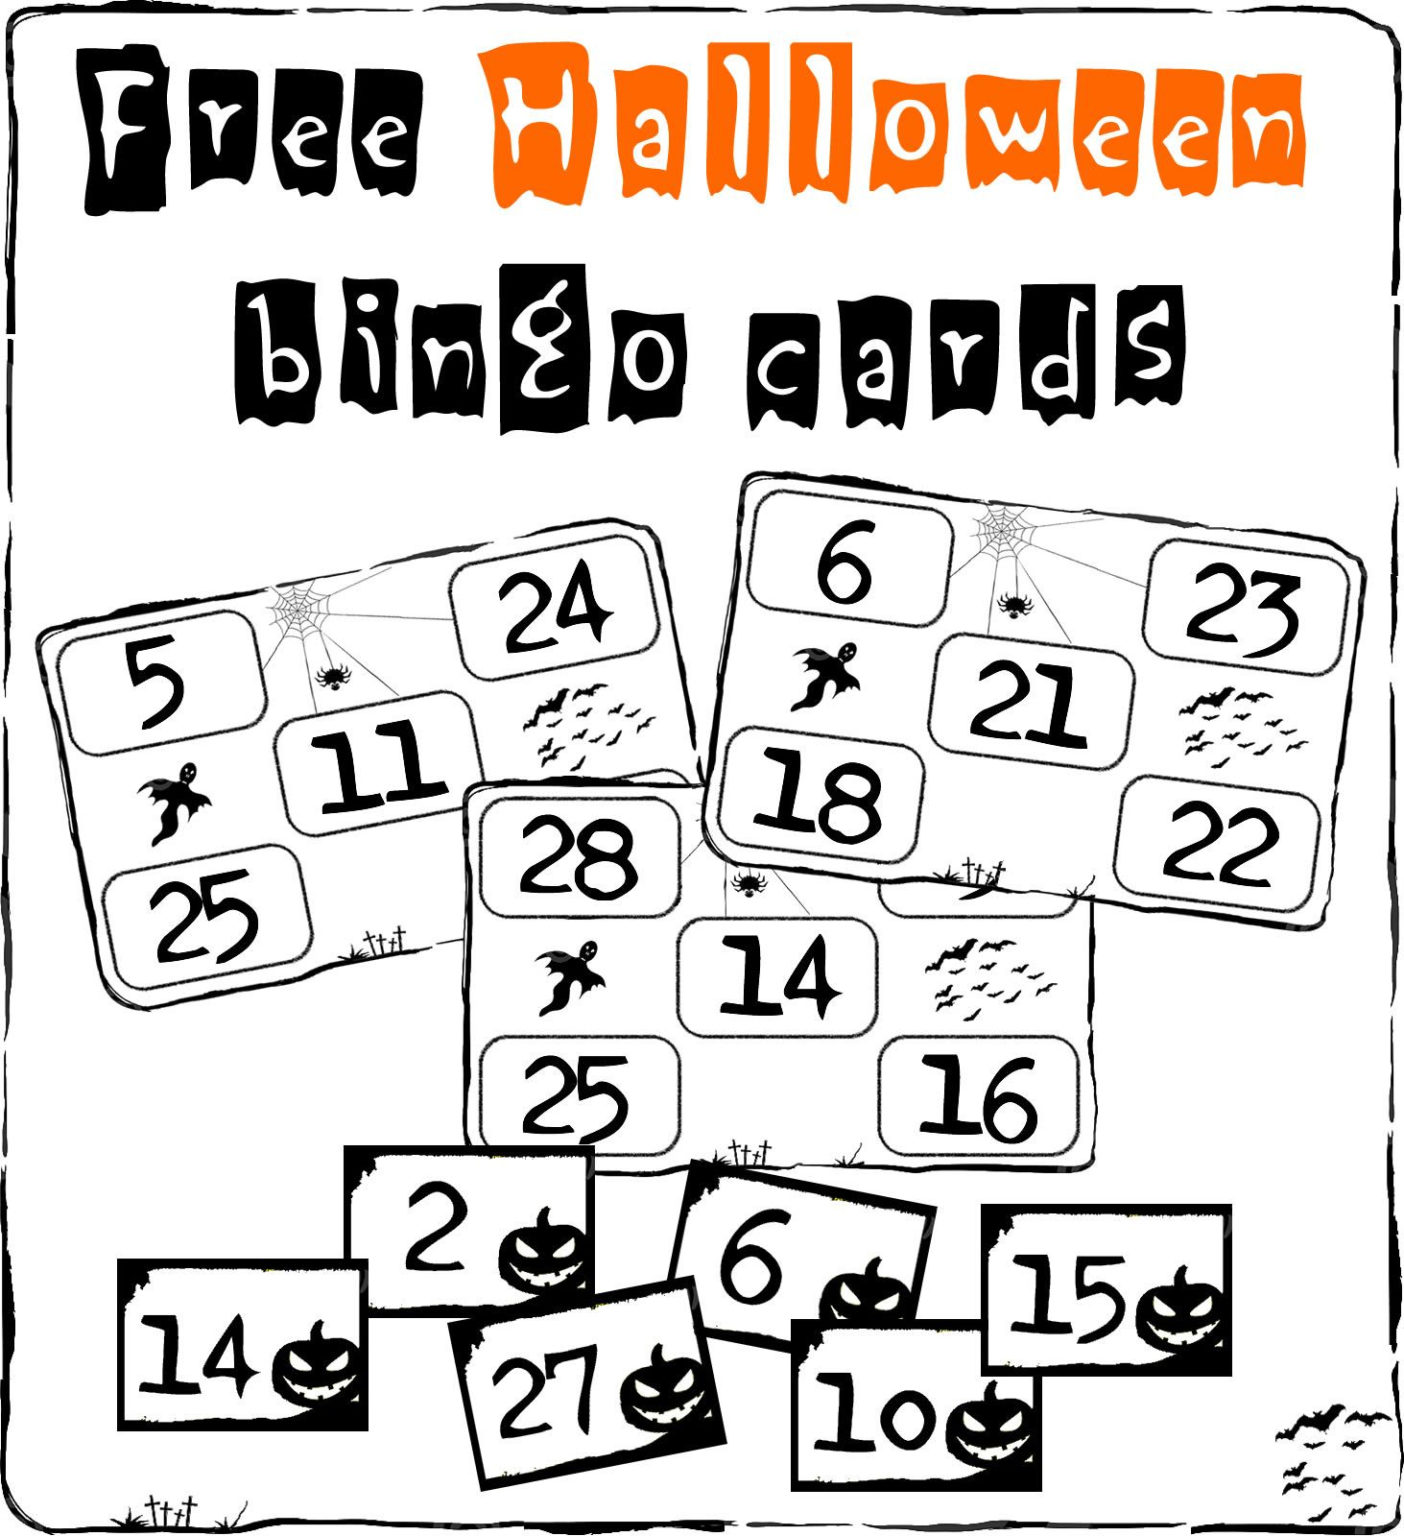 free-halloween-math-bingo-con-im-genes-printable-bingo-cards